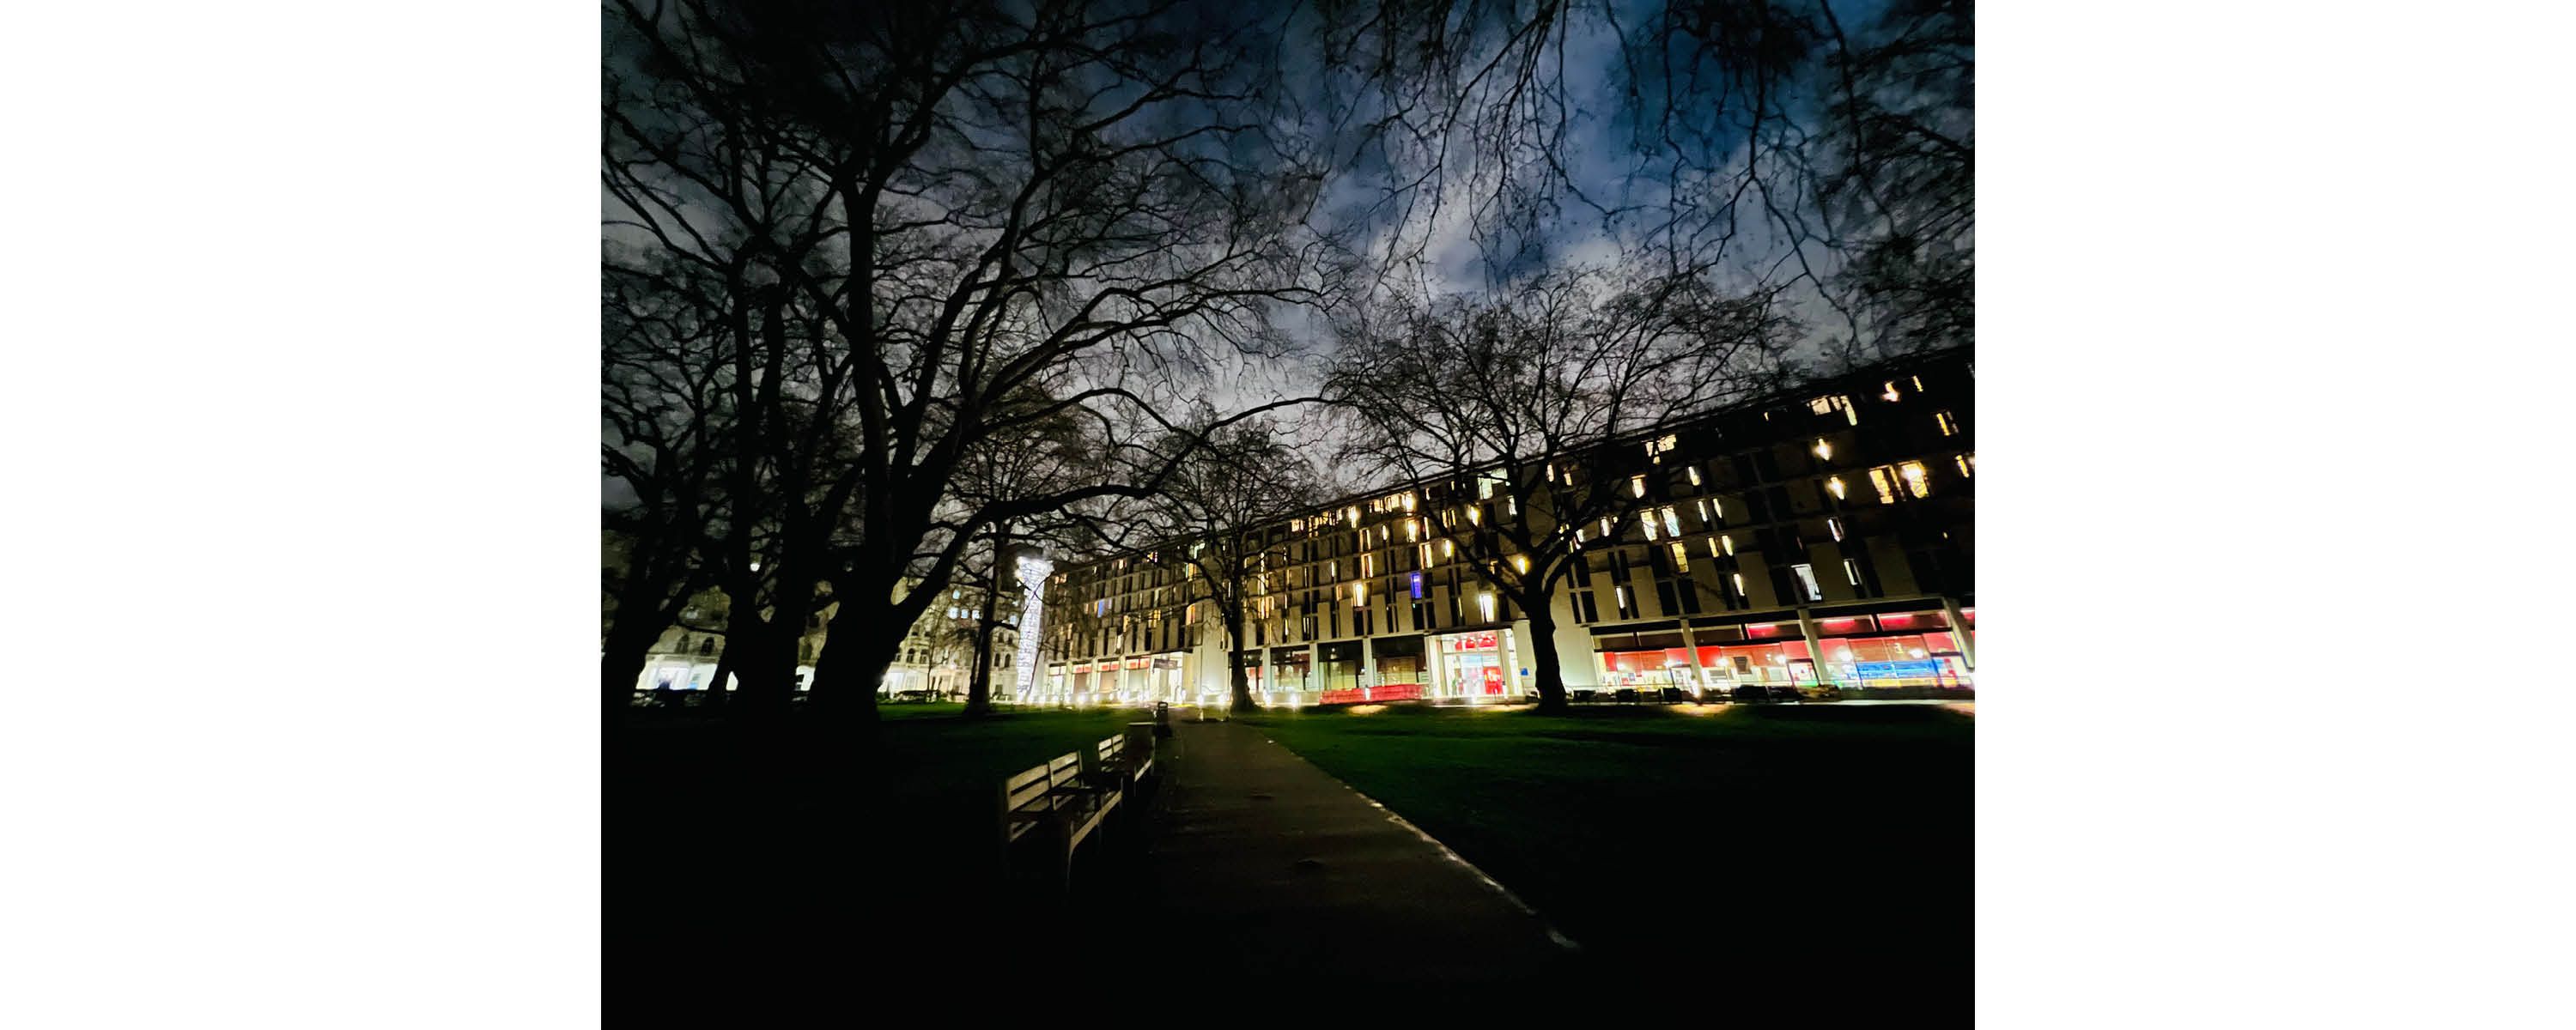 Imperial campus at night